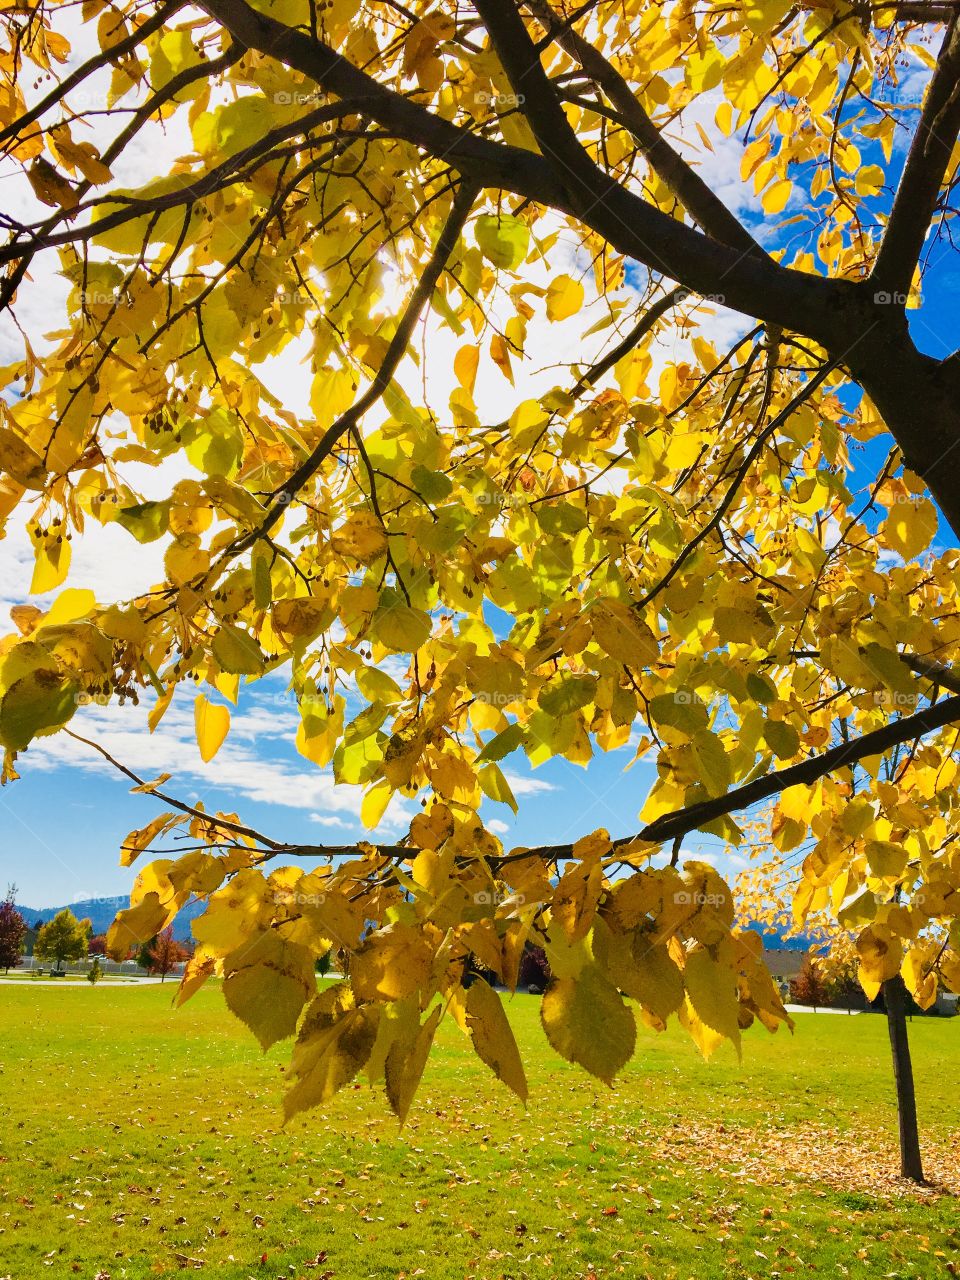 Golden leaves of fall 